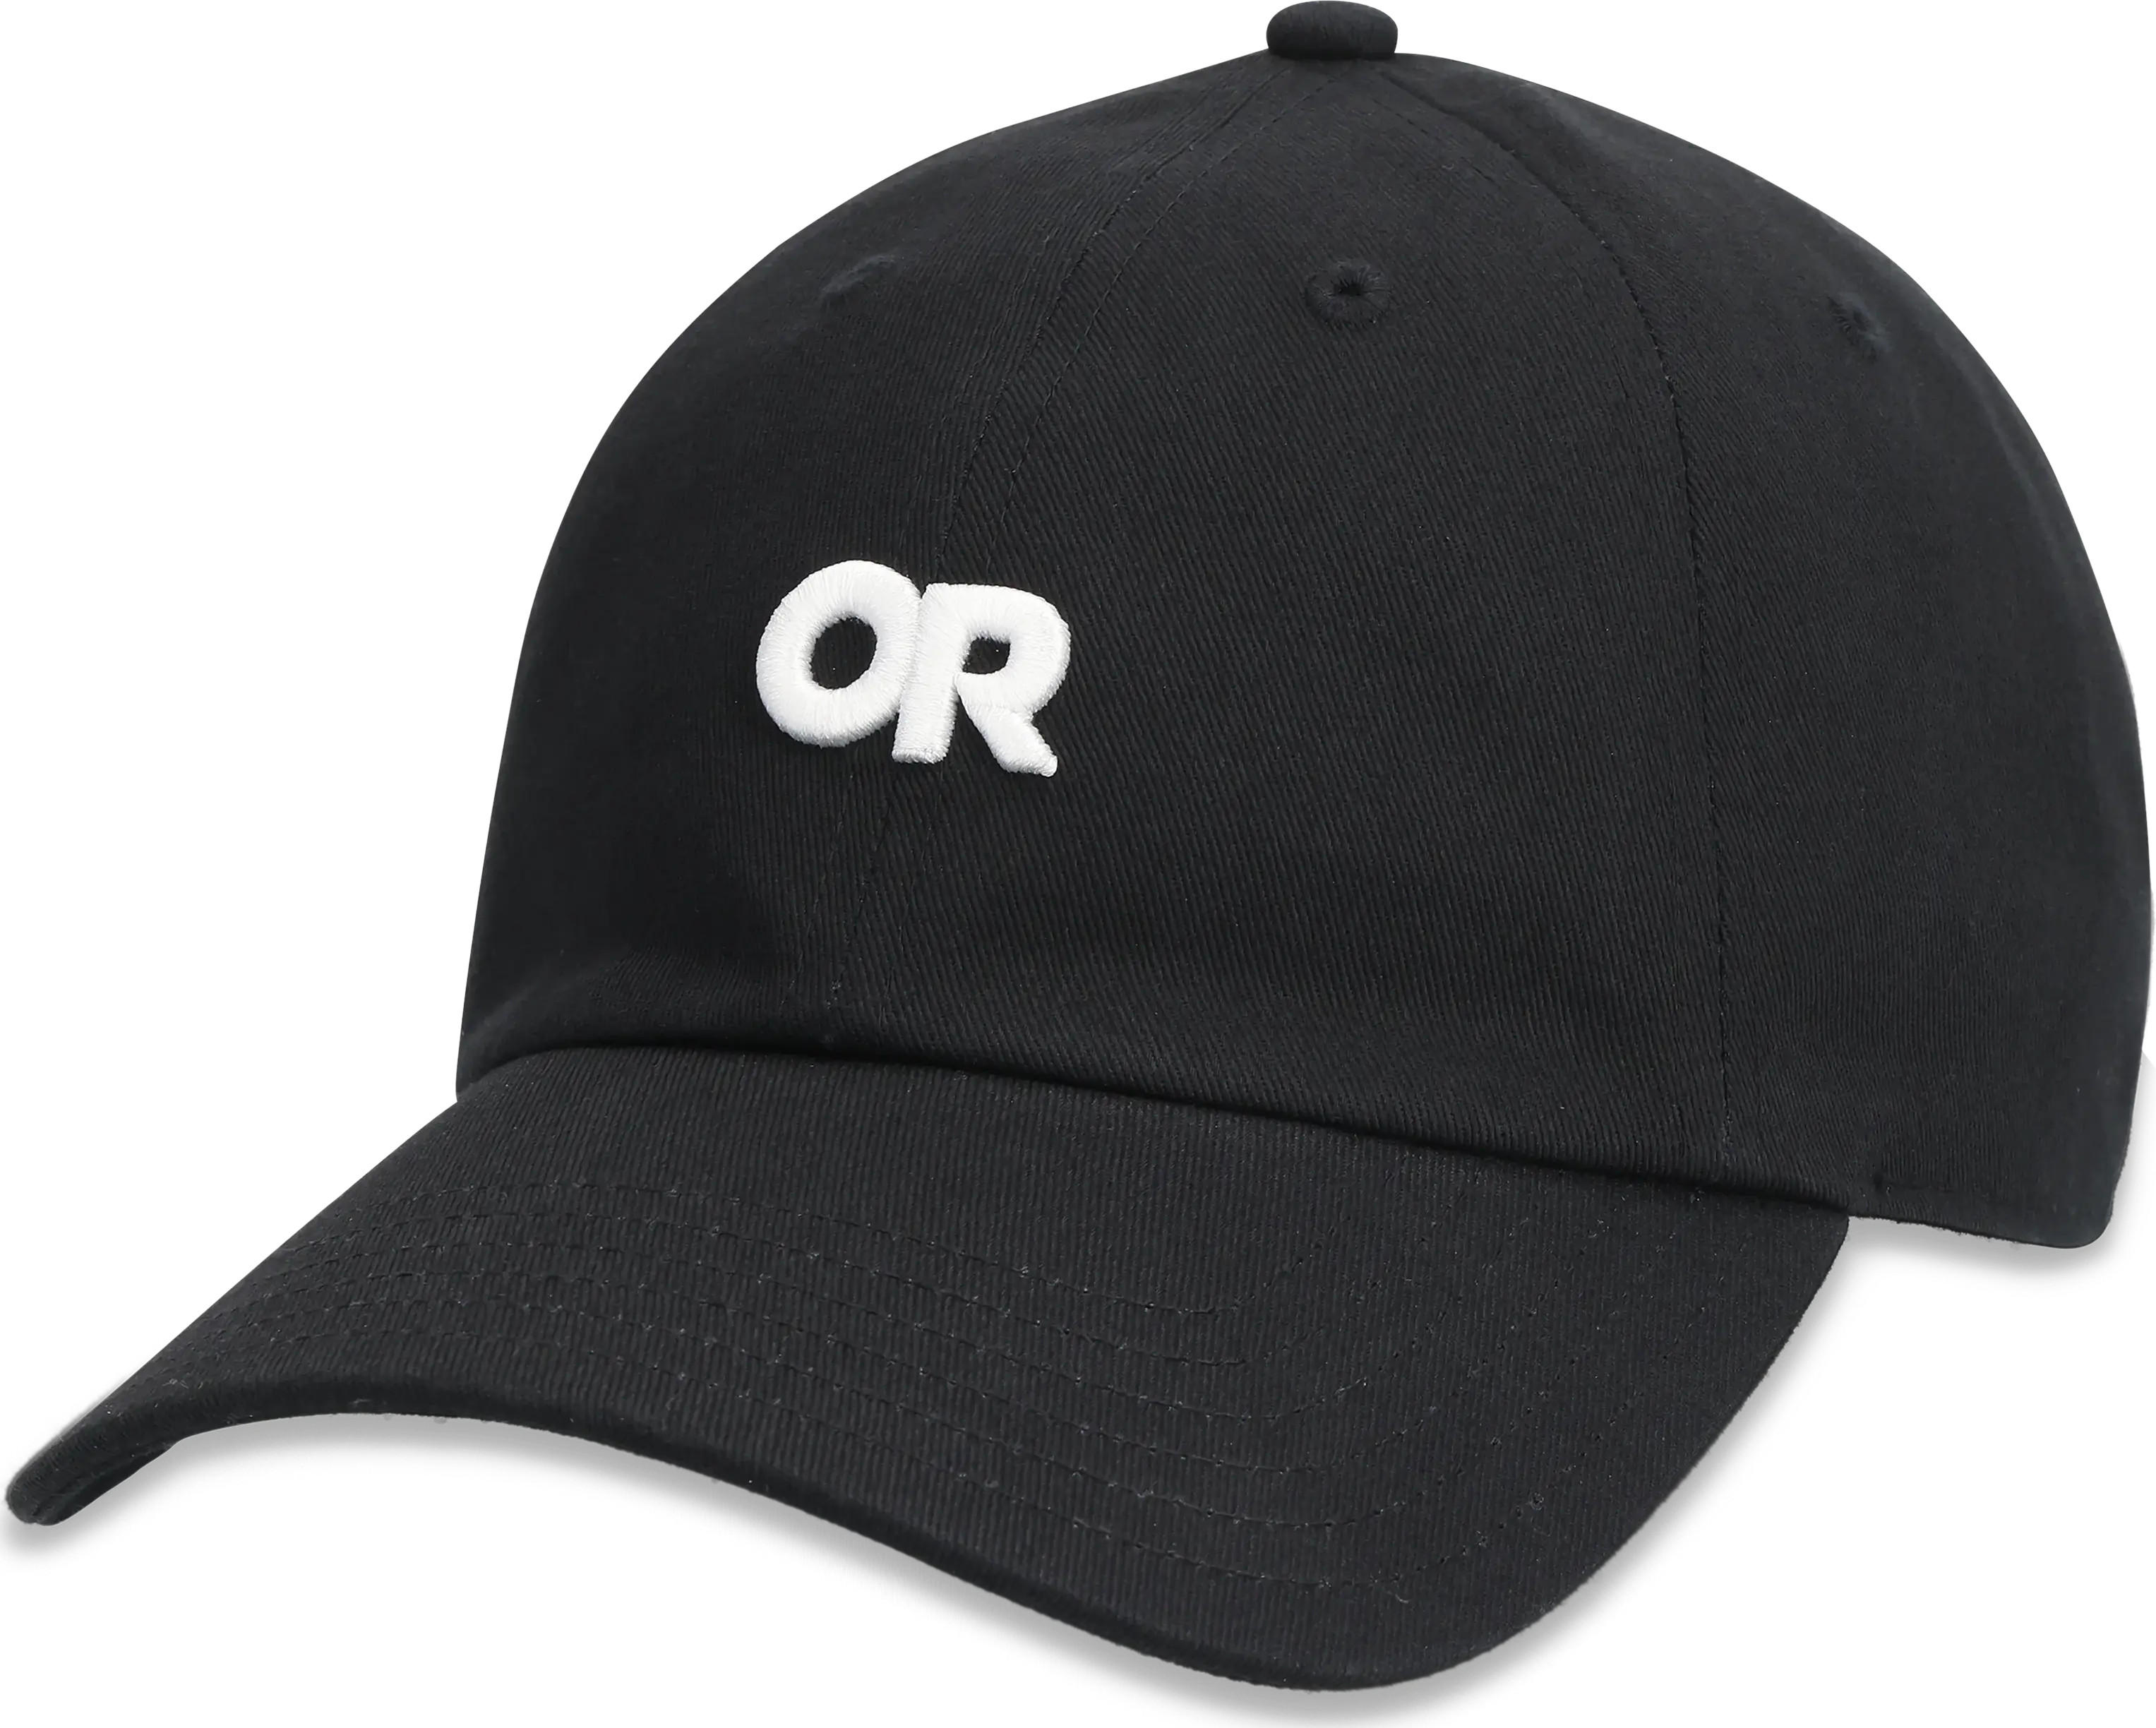 Outdoor Research Men's OR Ballcap Black/White OneSize, Black/White